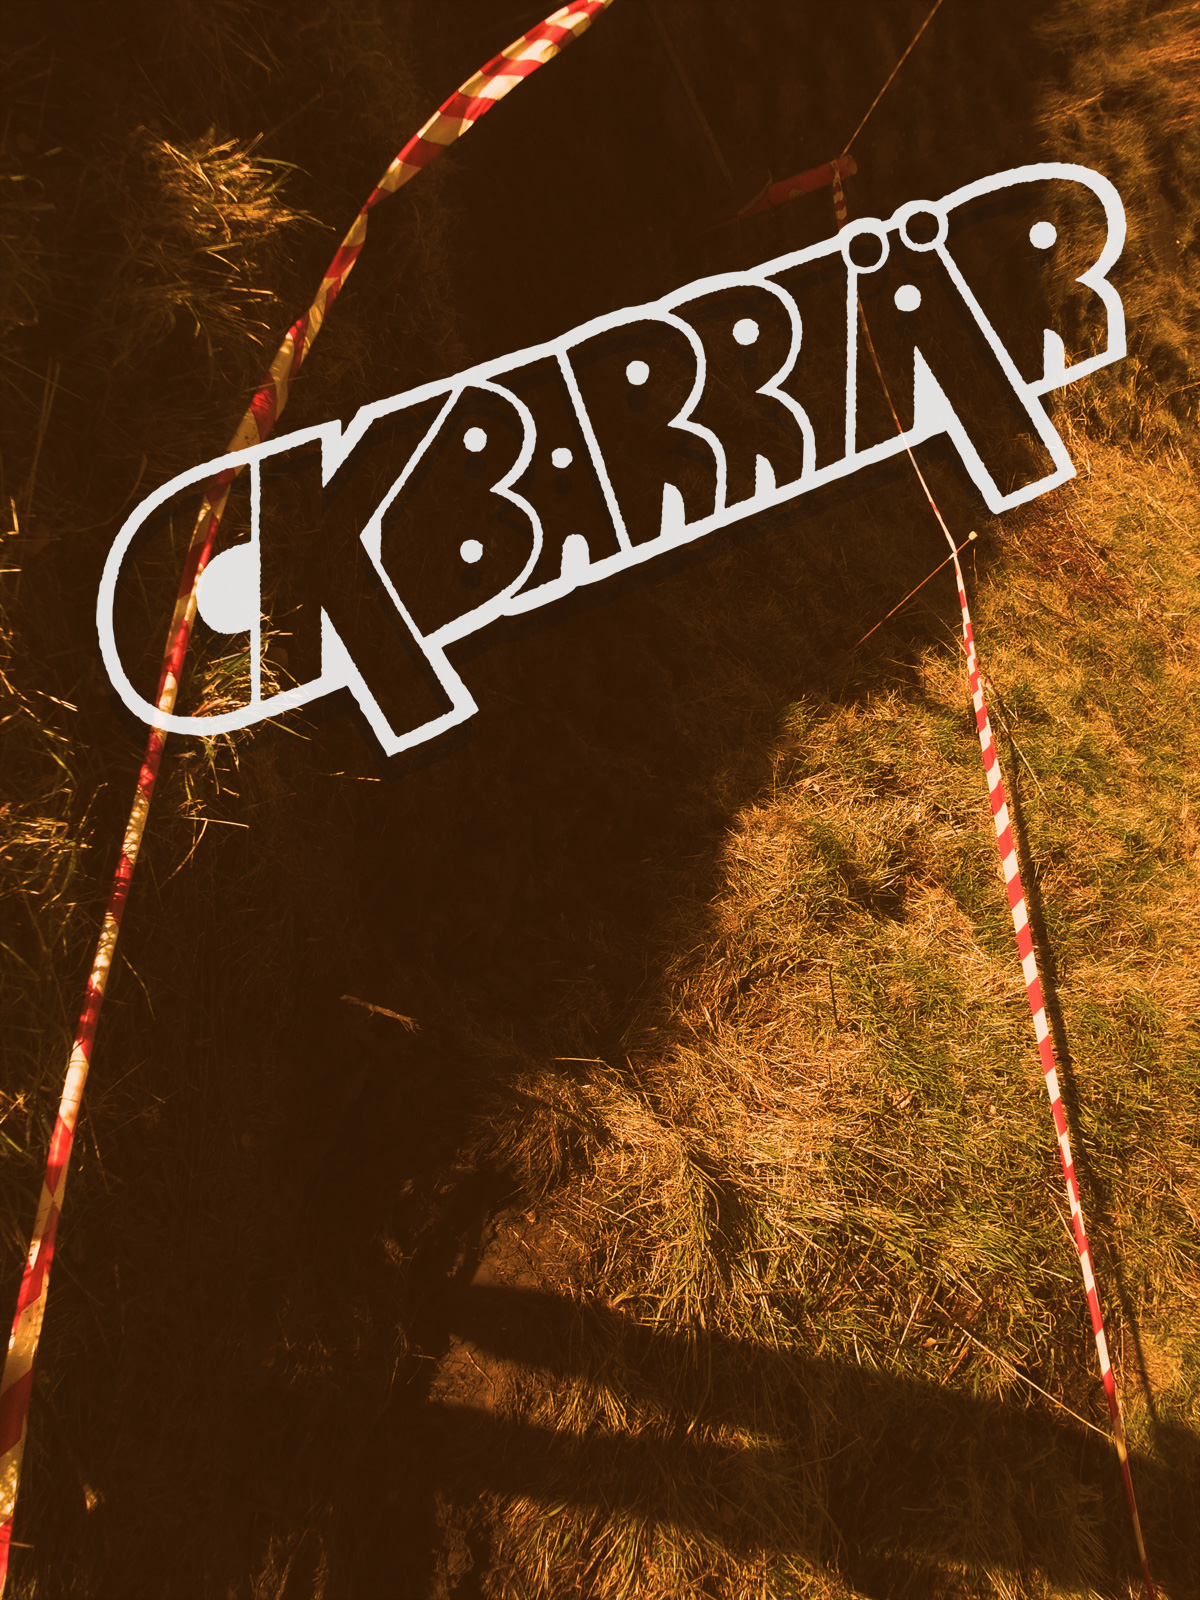 CKBarriar01